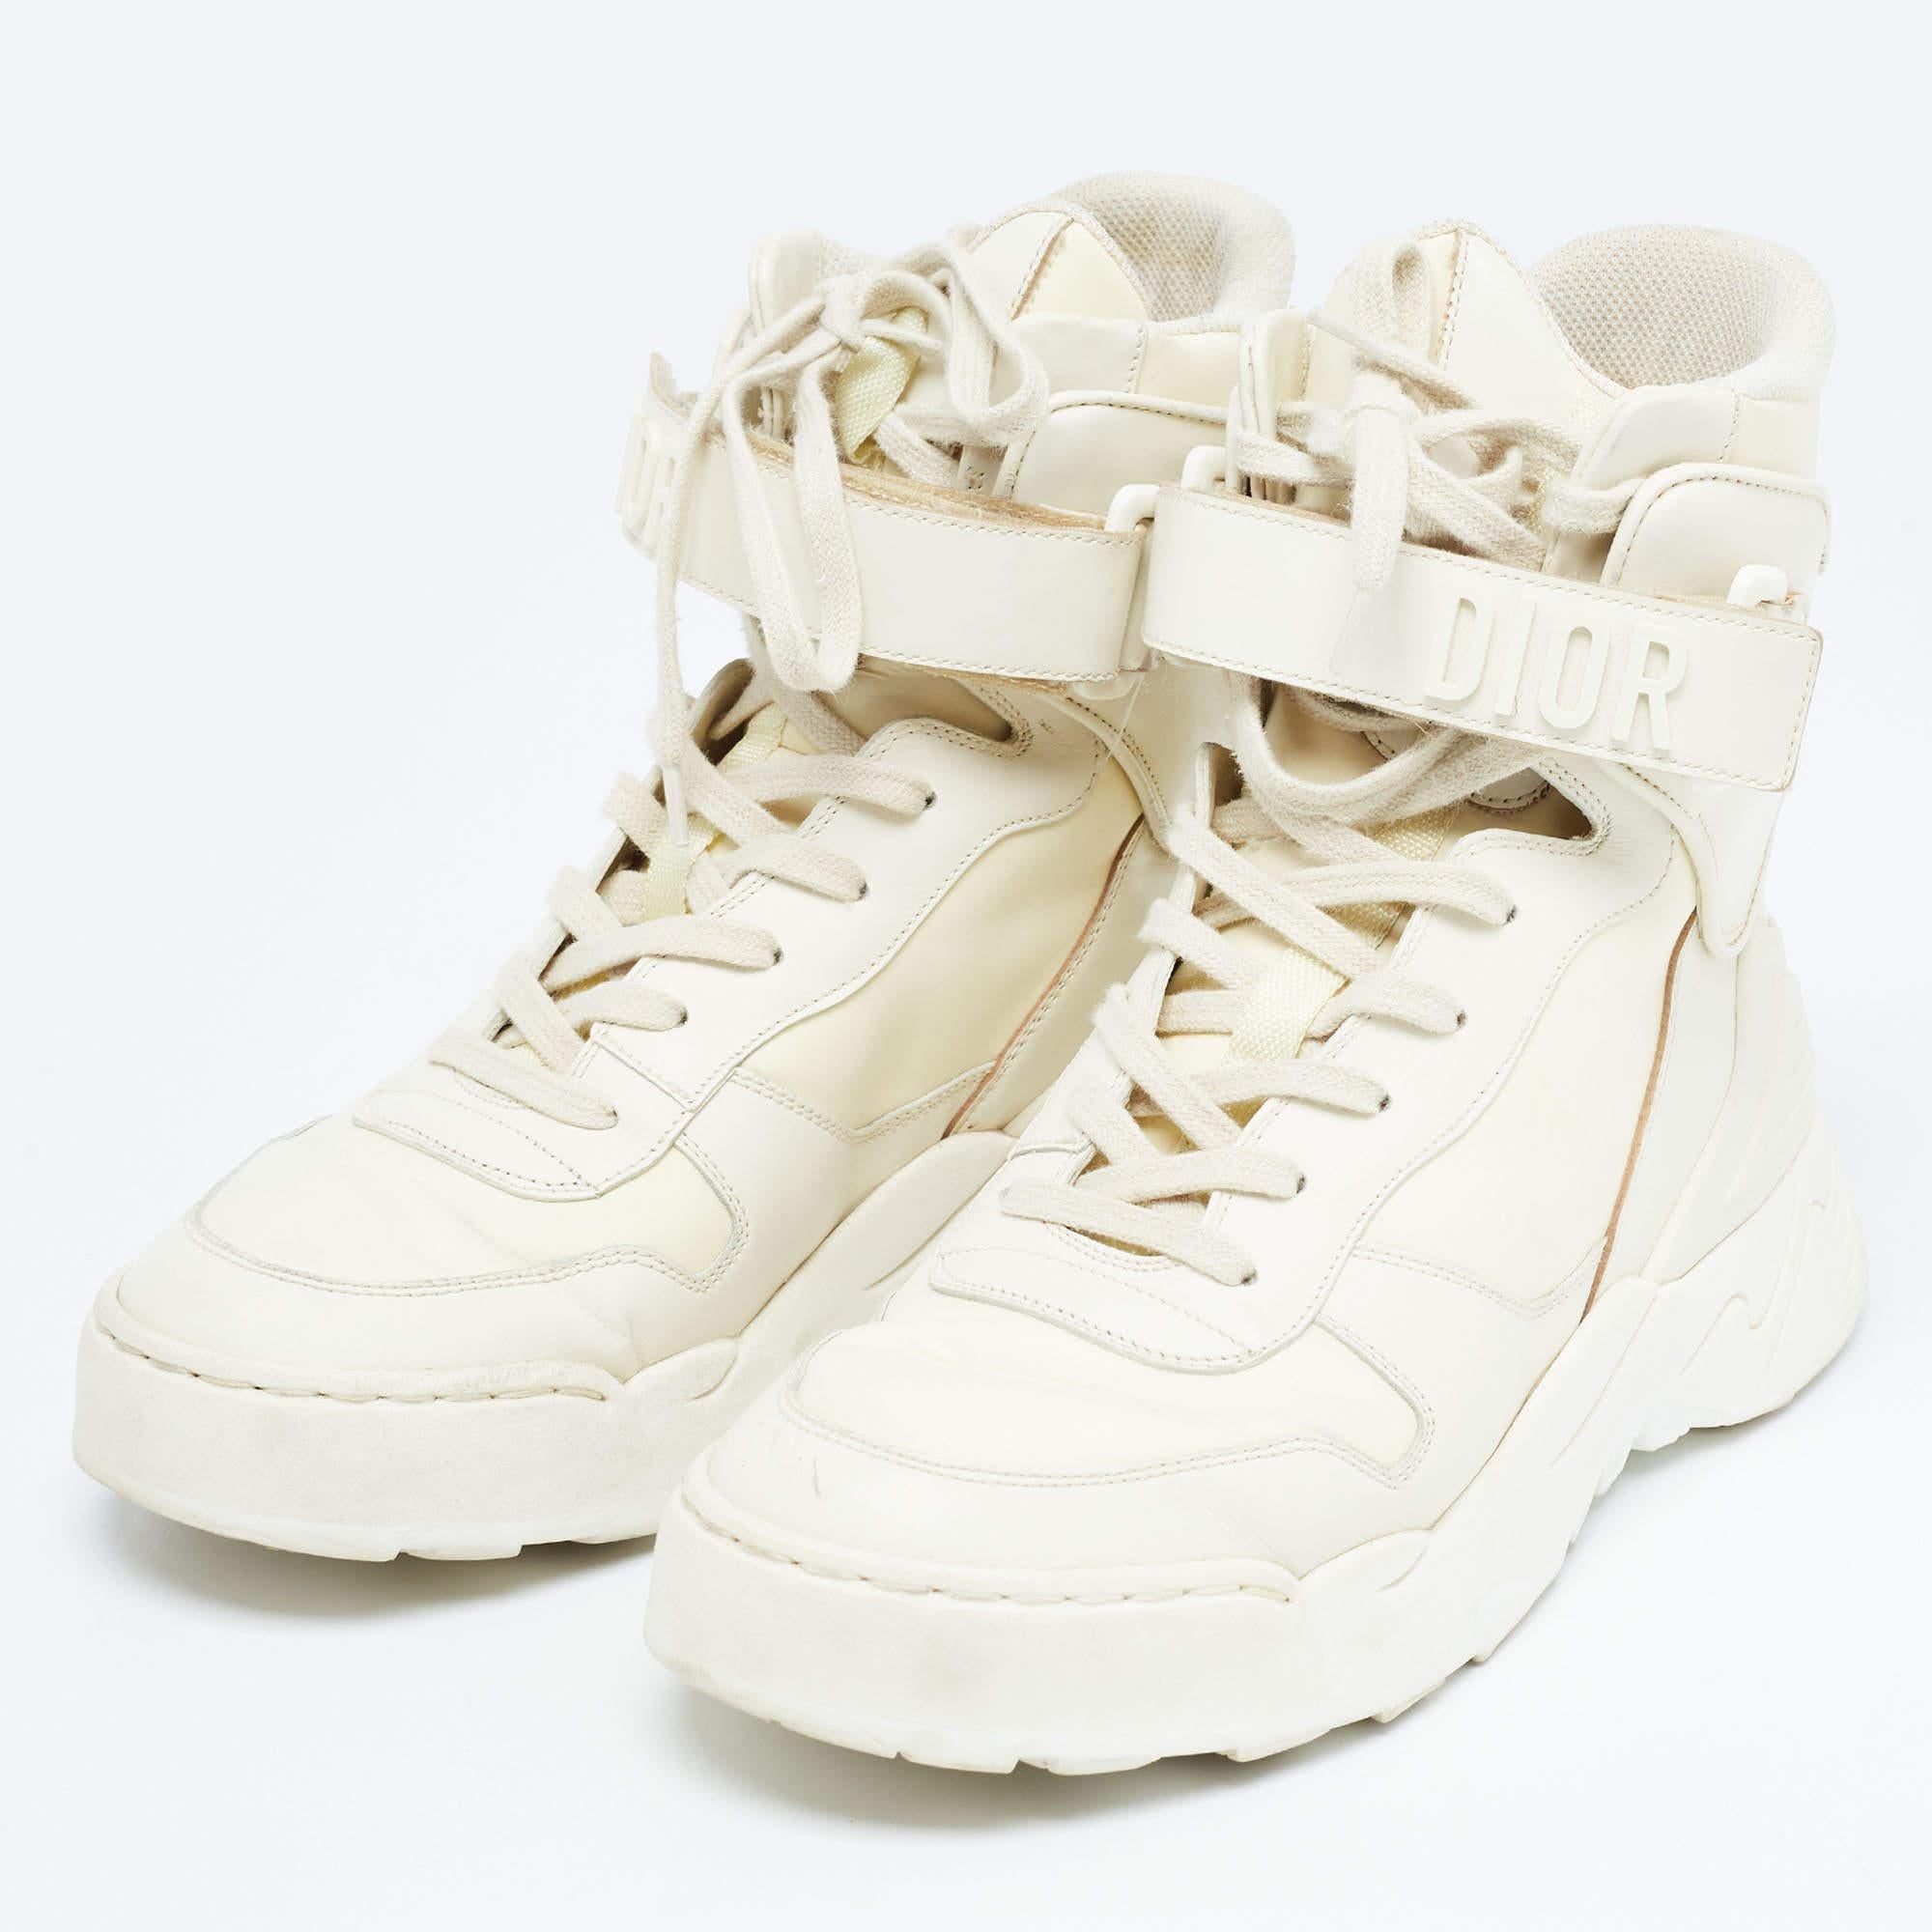 Dior Cream Leather Jumper High Top Sneakers Size 36 In Good Condition For Sale In Dubai, Al Qouz 2